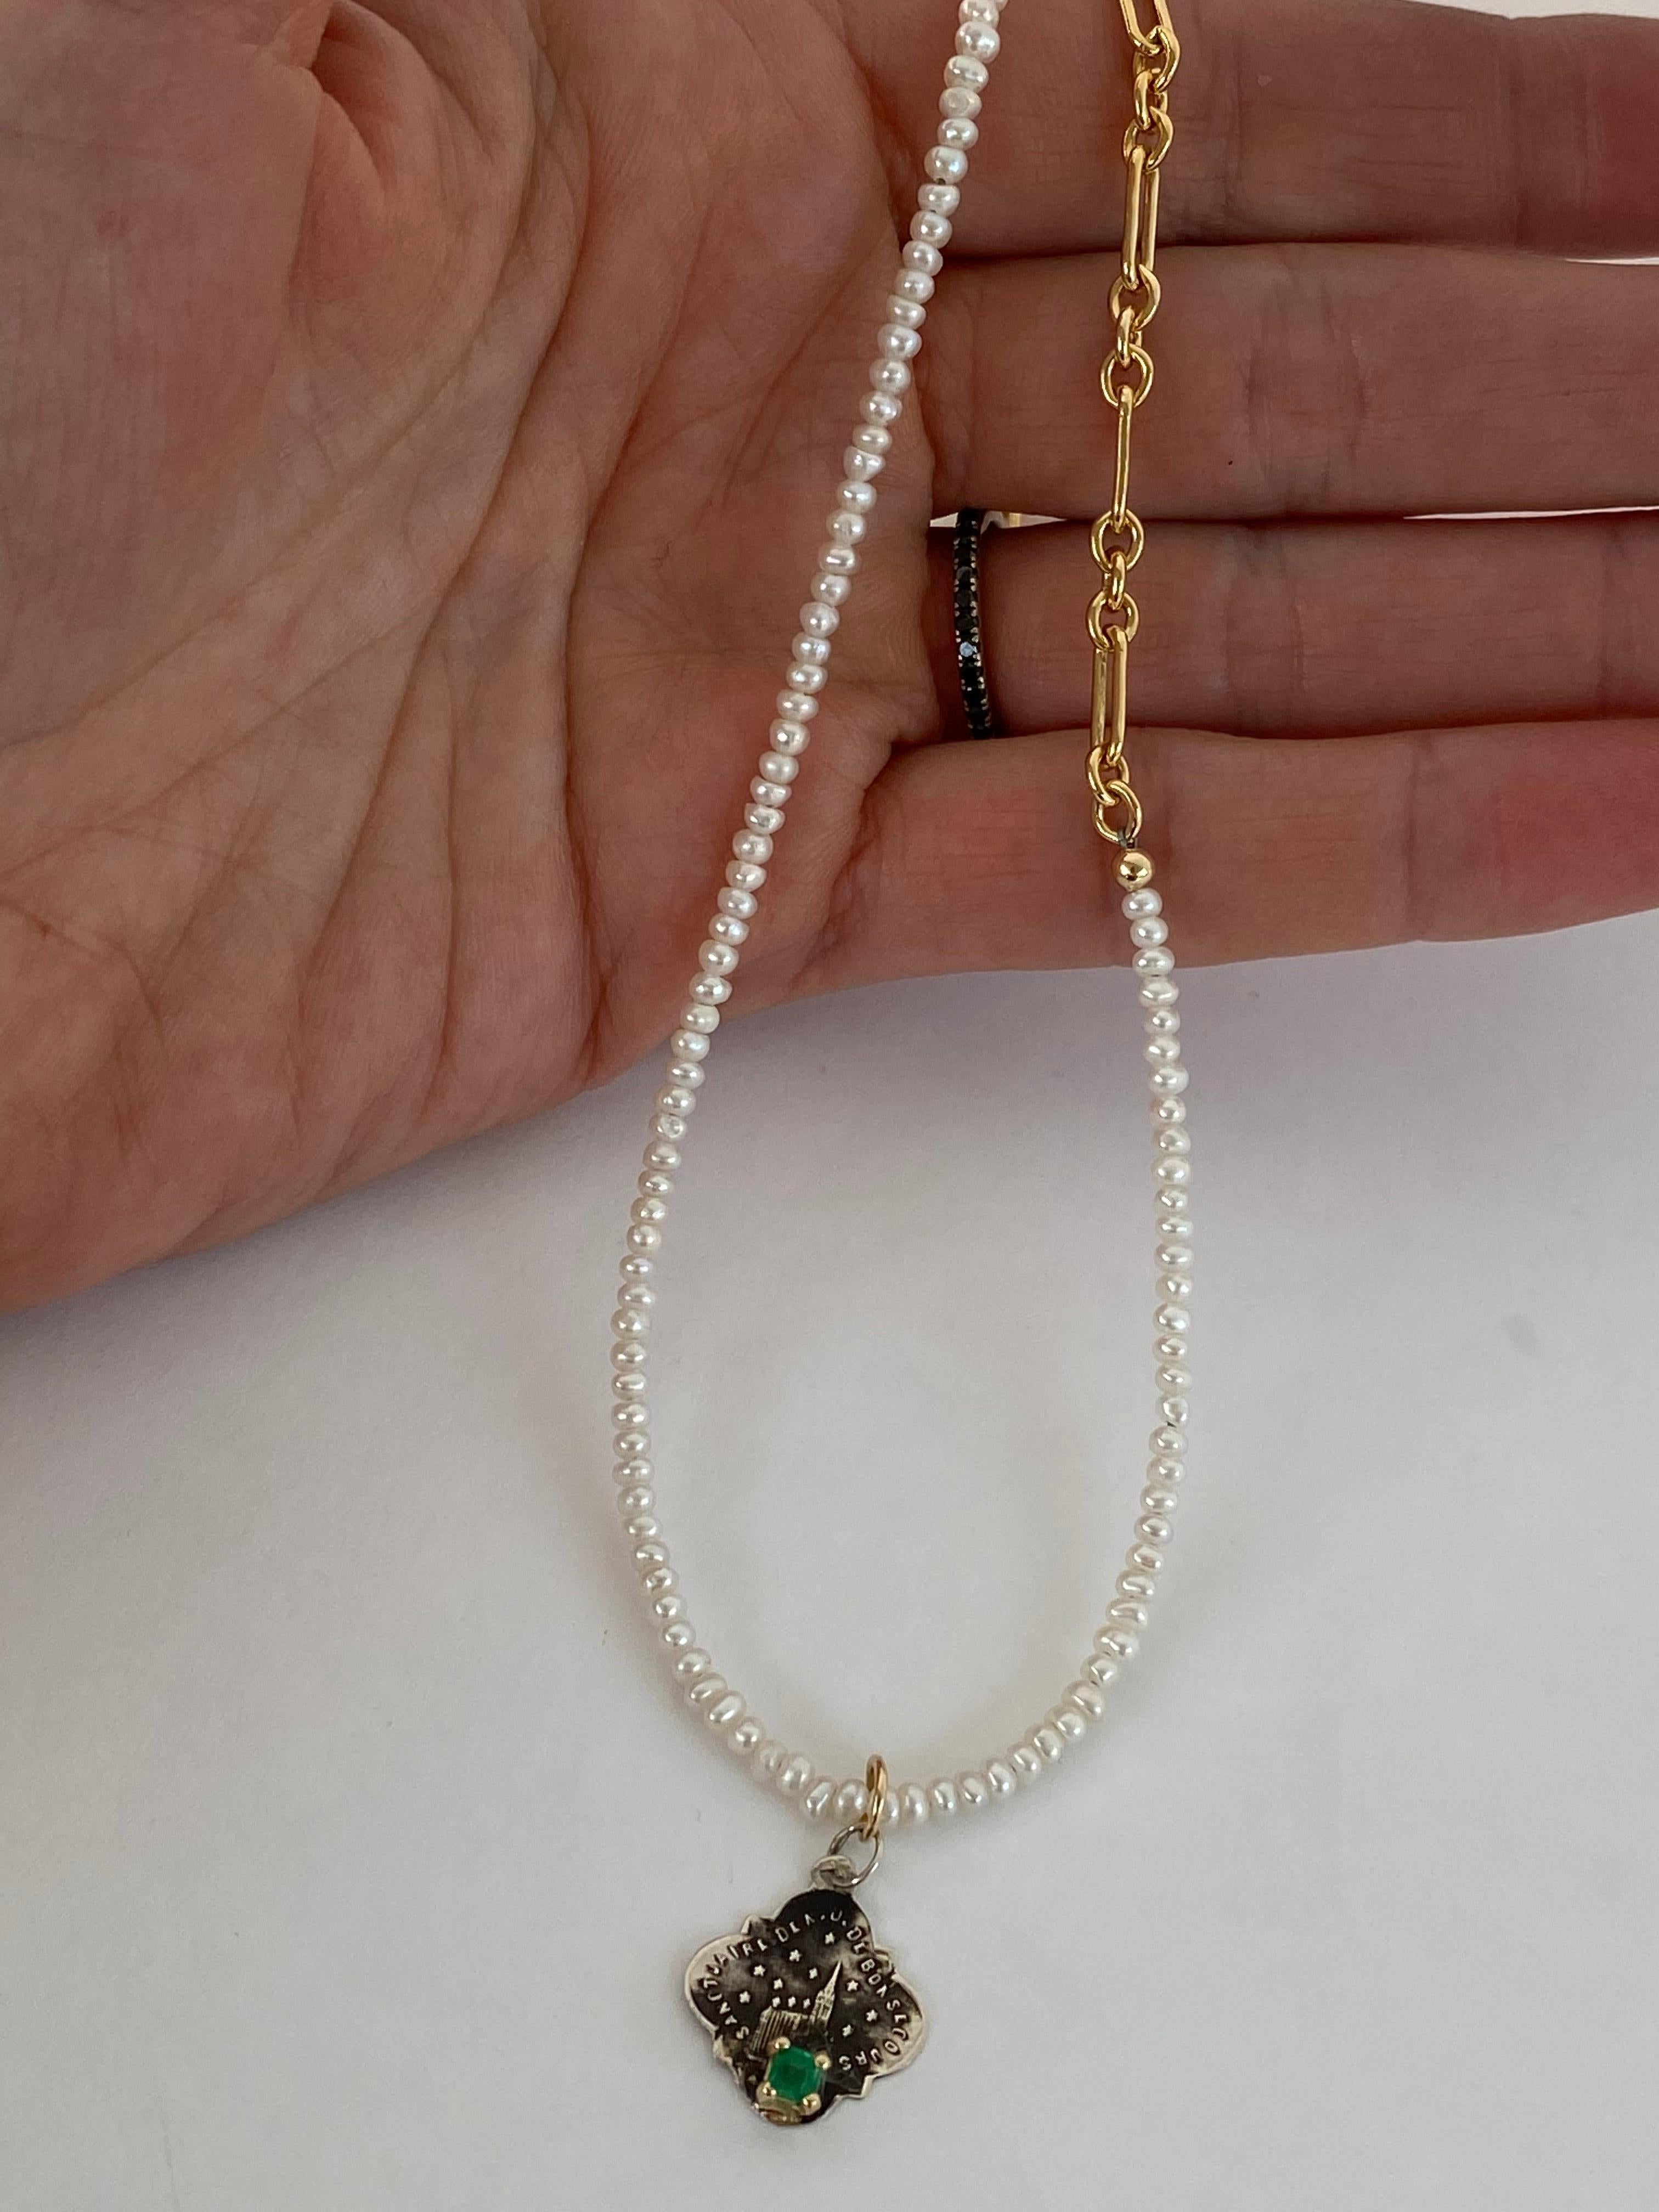 Emerald Cut Emerald White Pearl French Silver Spiritual Medal Pendant Chain Necklace